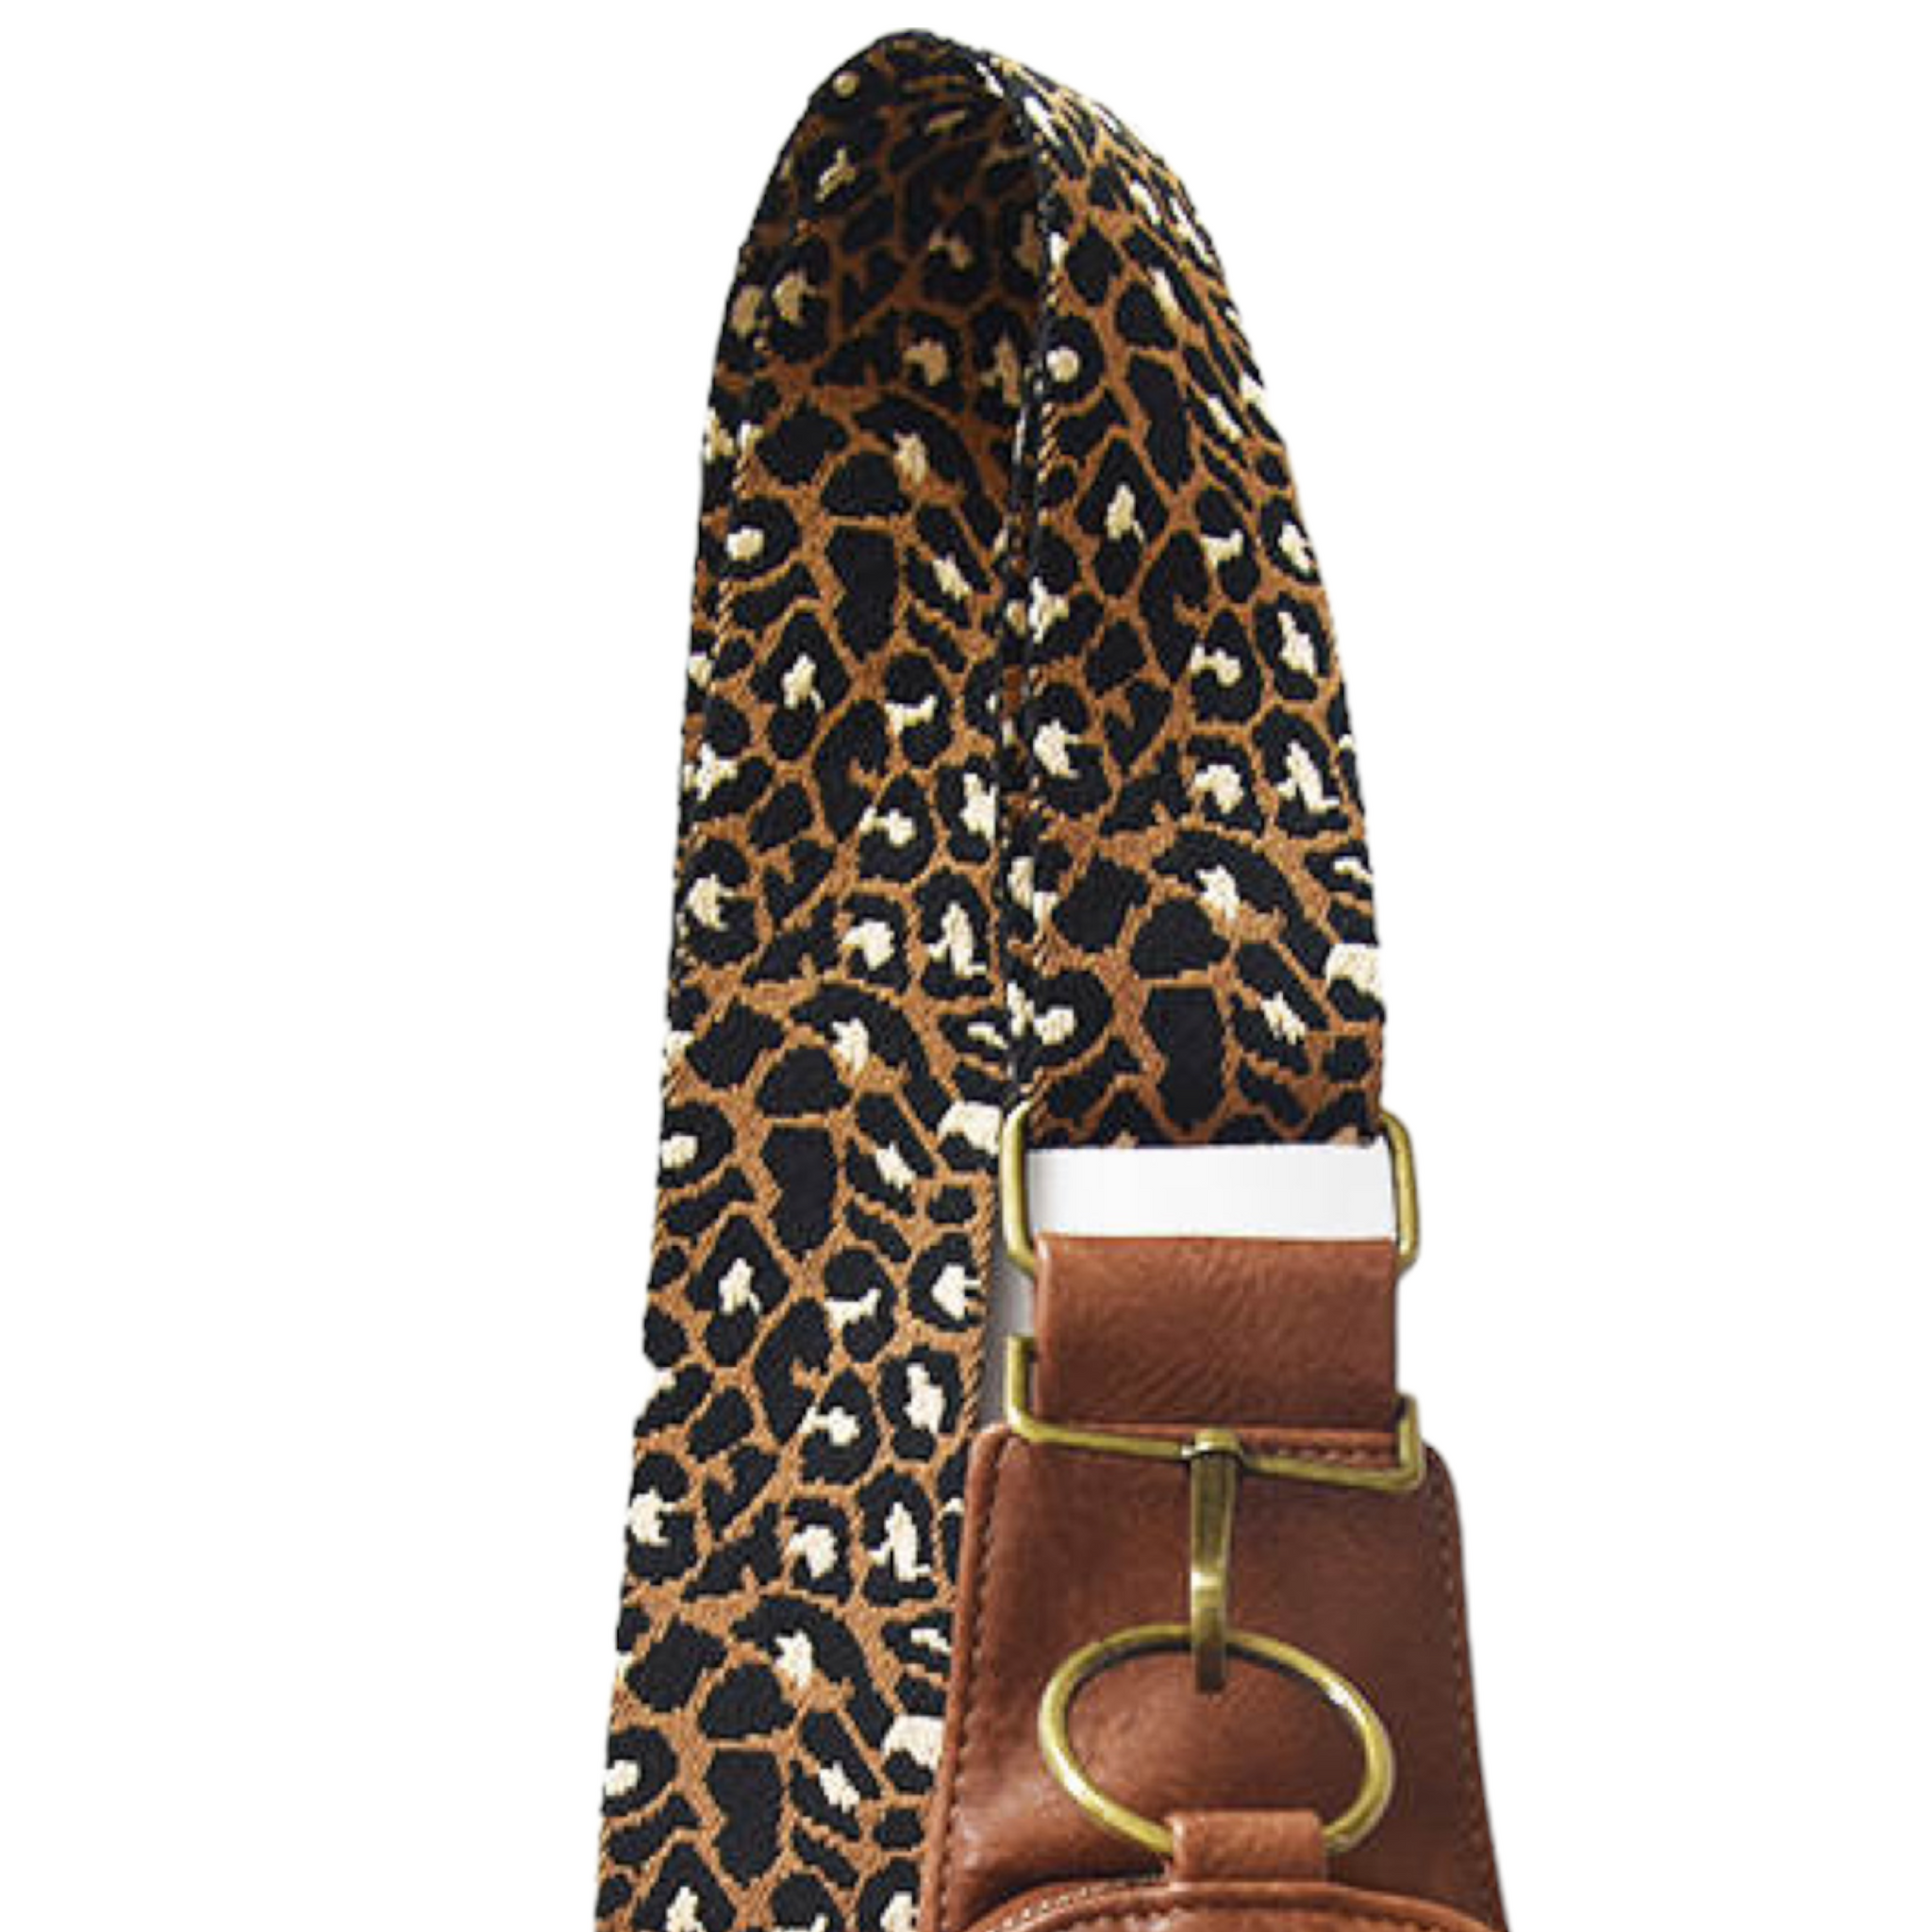 LV crossbody with cheetah guitar strap